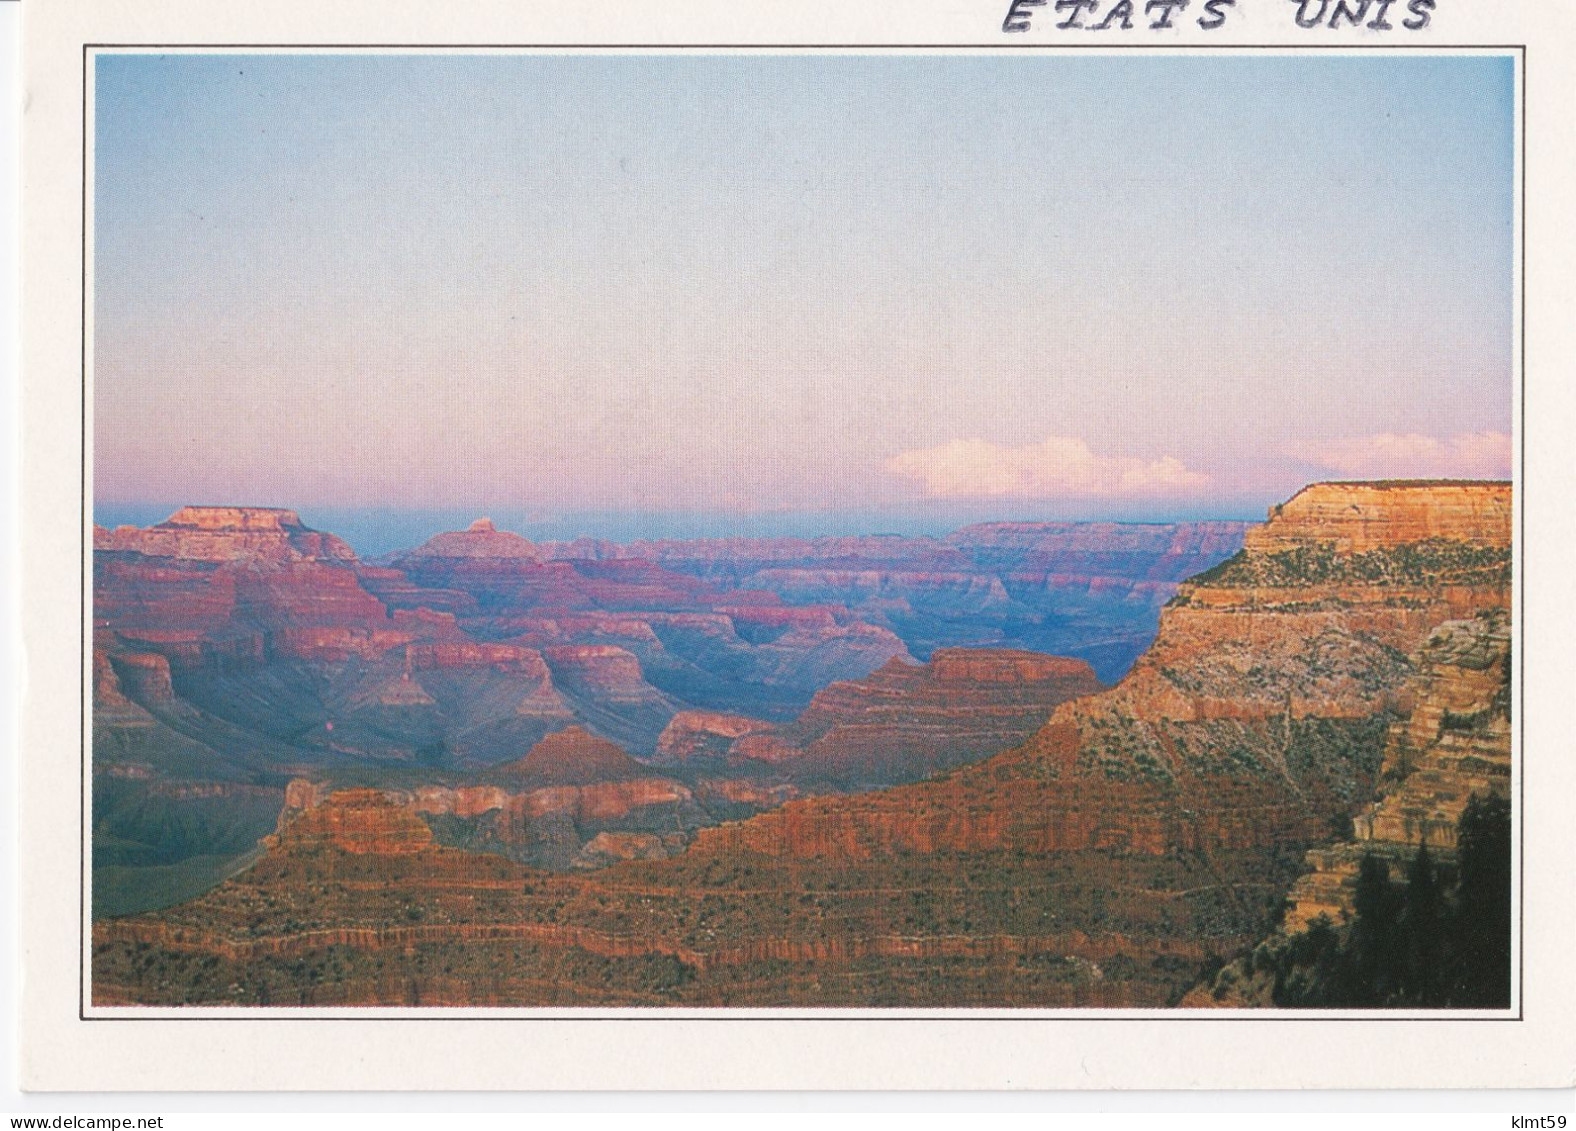 The Grand Canyon - Grand Canyon